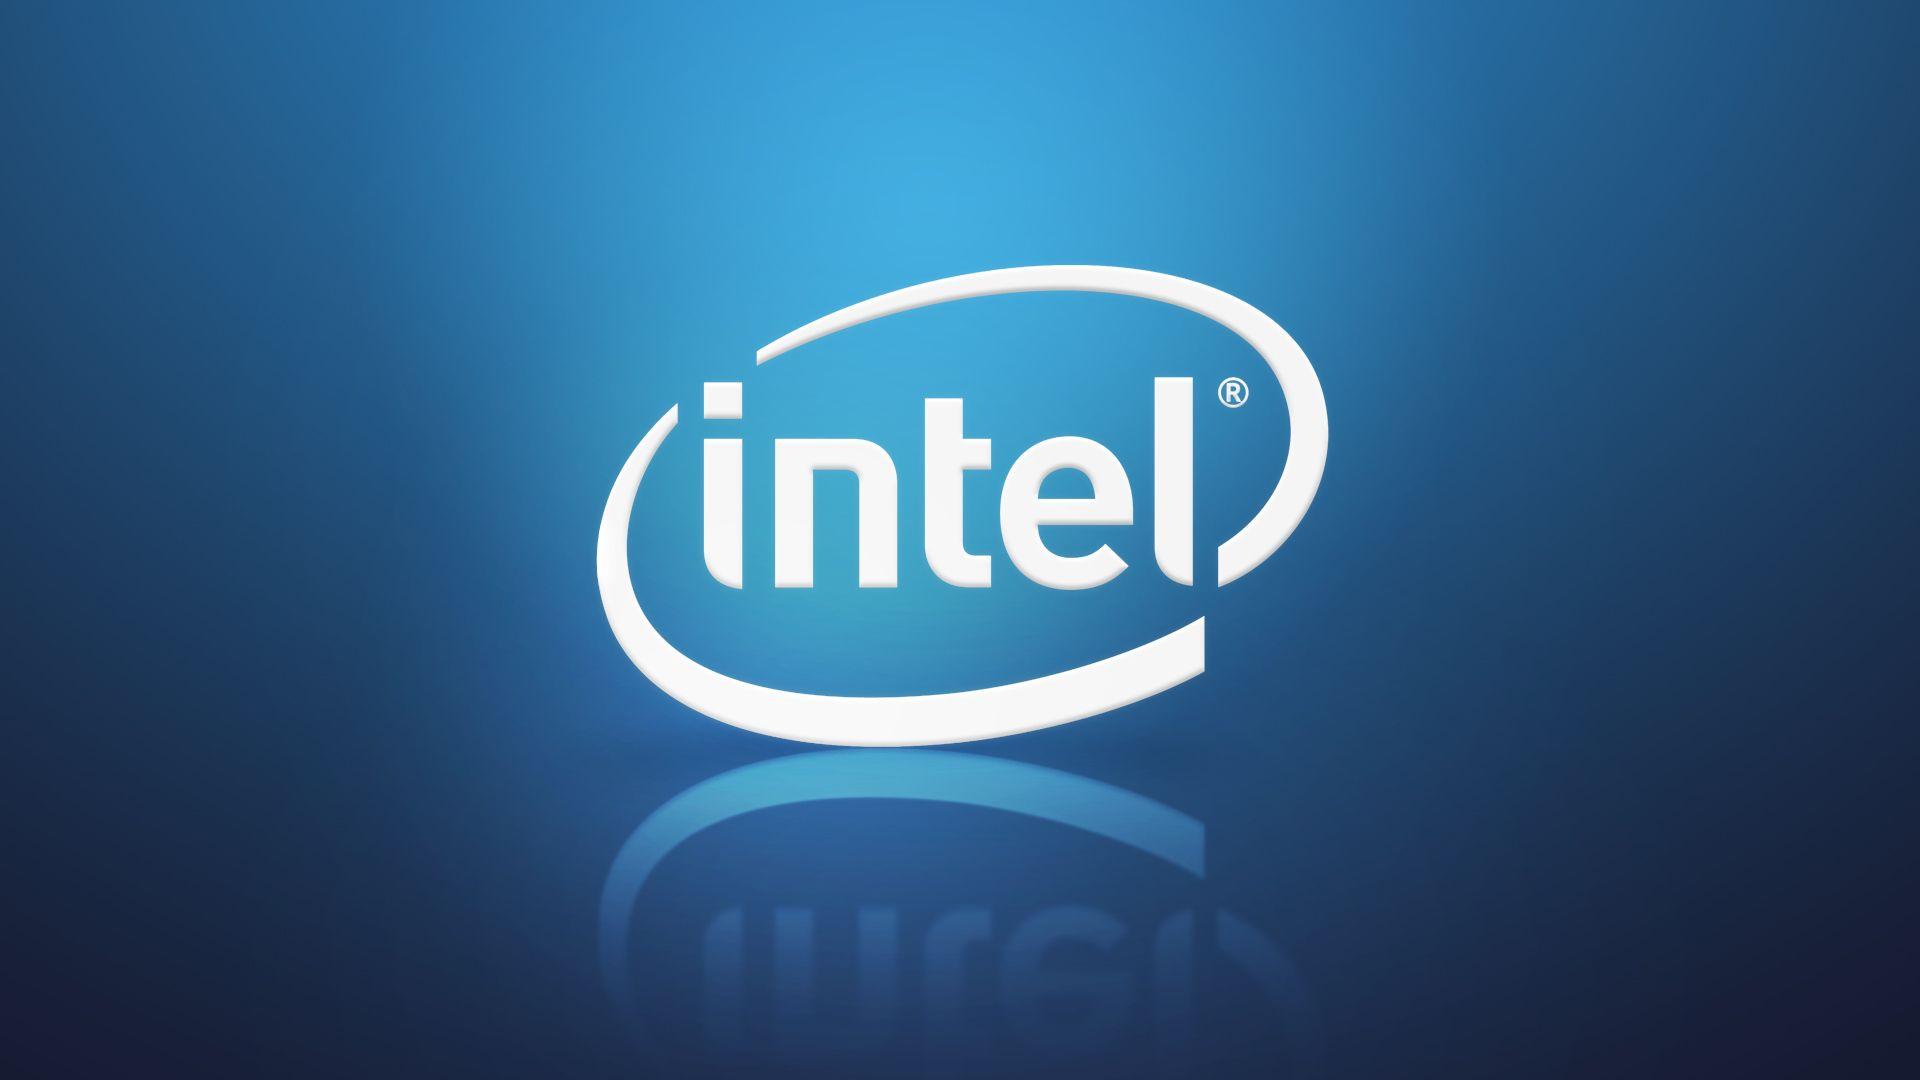 Intel Desktop Wallpapers Top Free Intel Desktop Backgrounds Wallpaperaccess